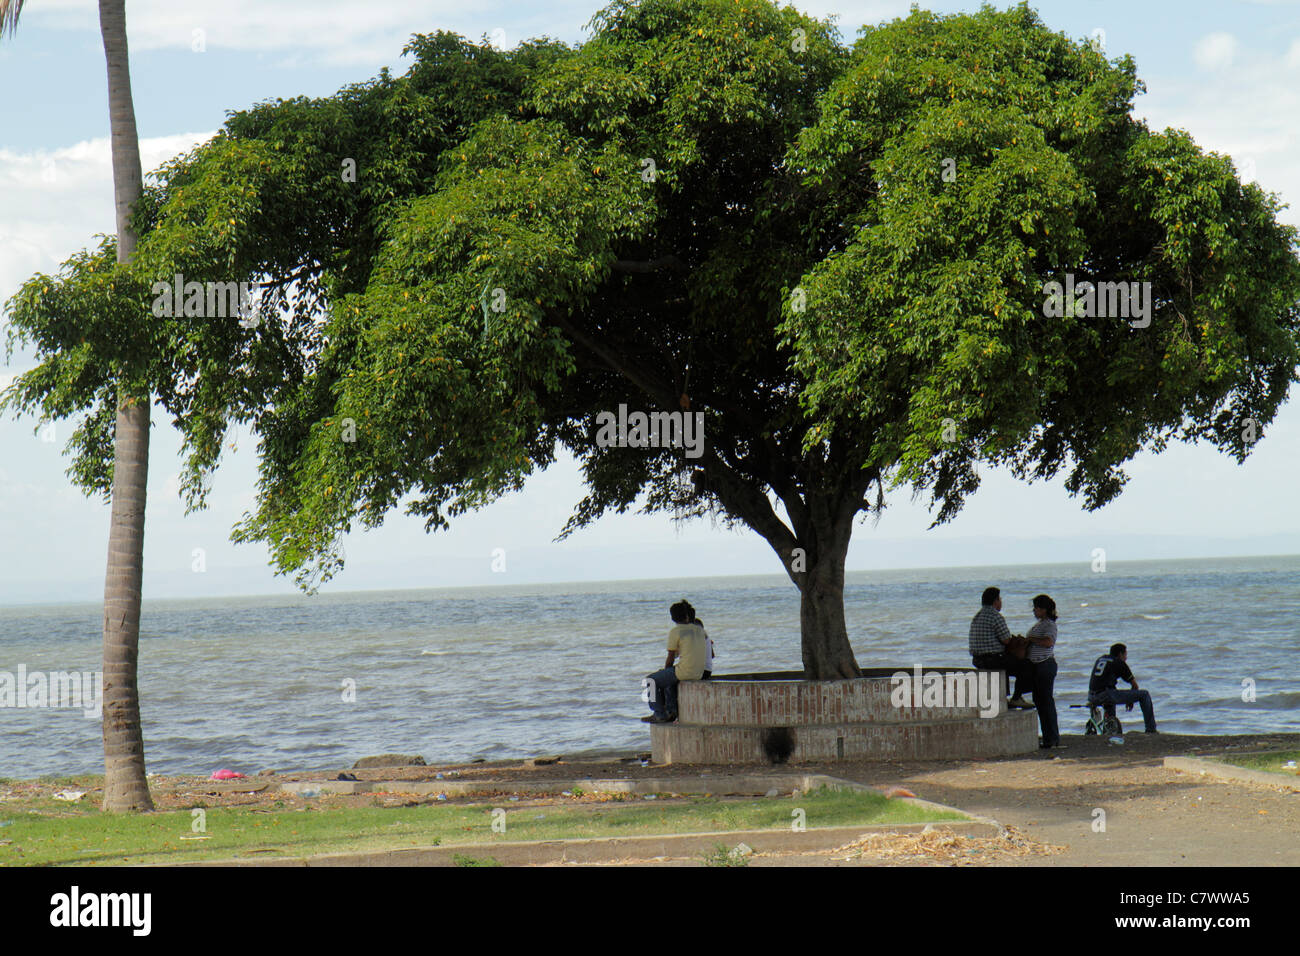 Managua Nicaragua, El Malecon, Lake Managua, Xolotlan, Waterfront, Erholungsgebiet, Baum, Baldachin, Schatten, Mann Männer Erwachsene Erwachsene, Frau Frauen, Paar, Stockfoto